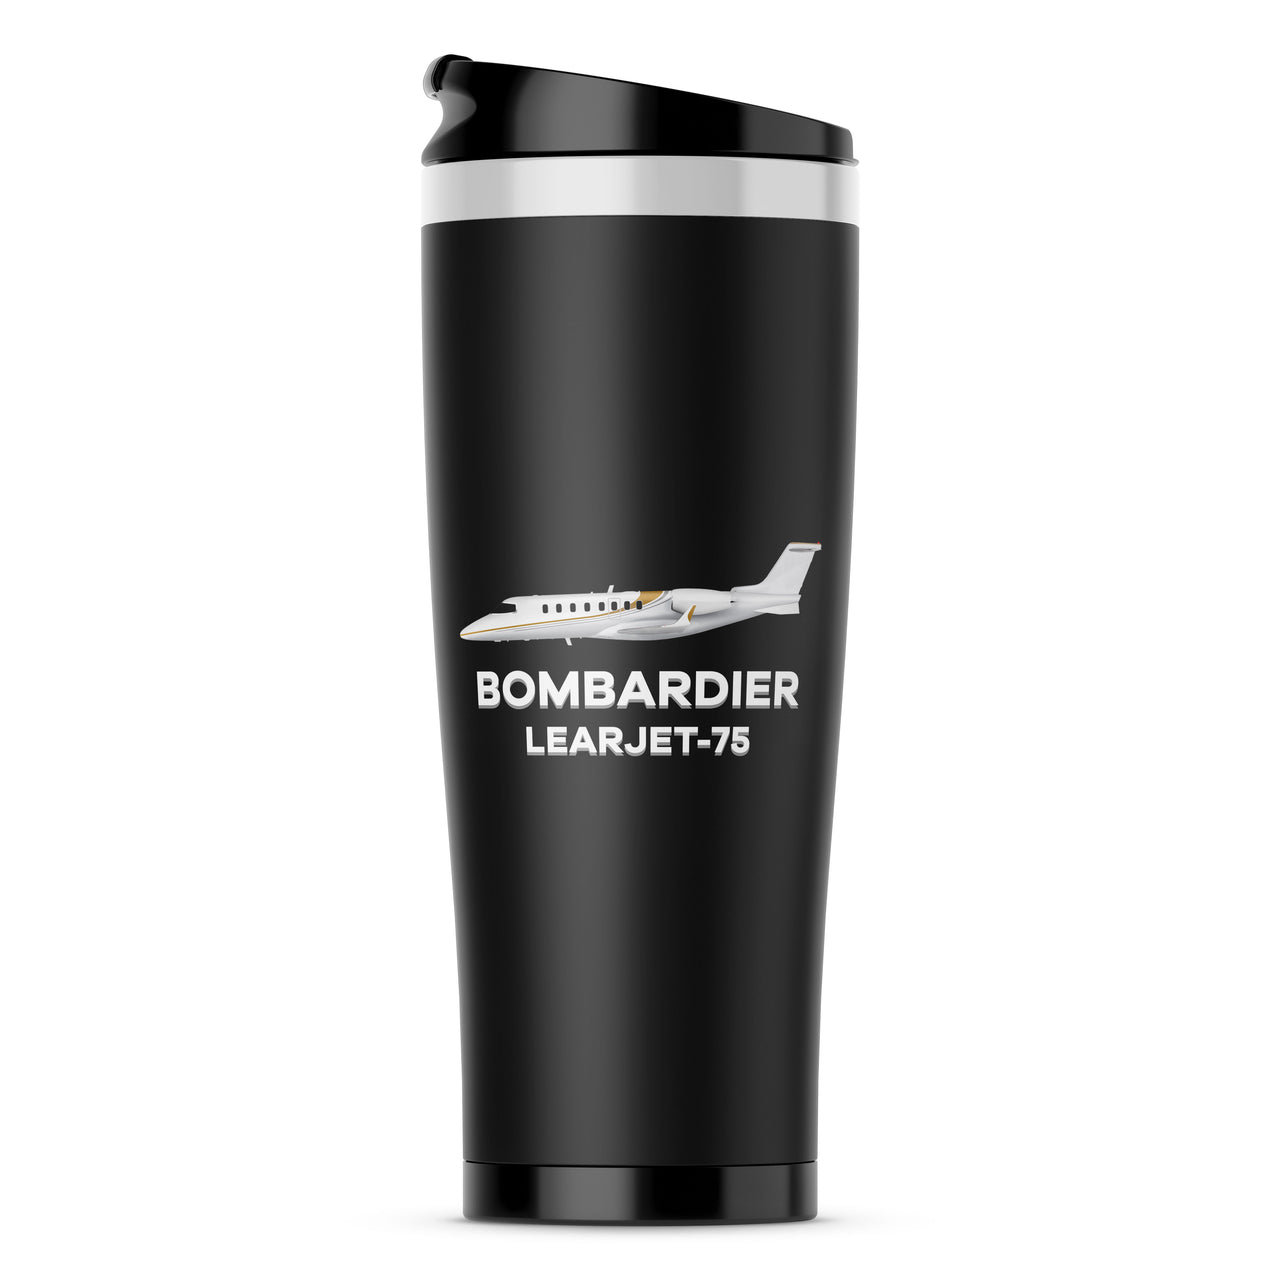 The Bombardier Learjet 75 Designed Travel Mugs